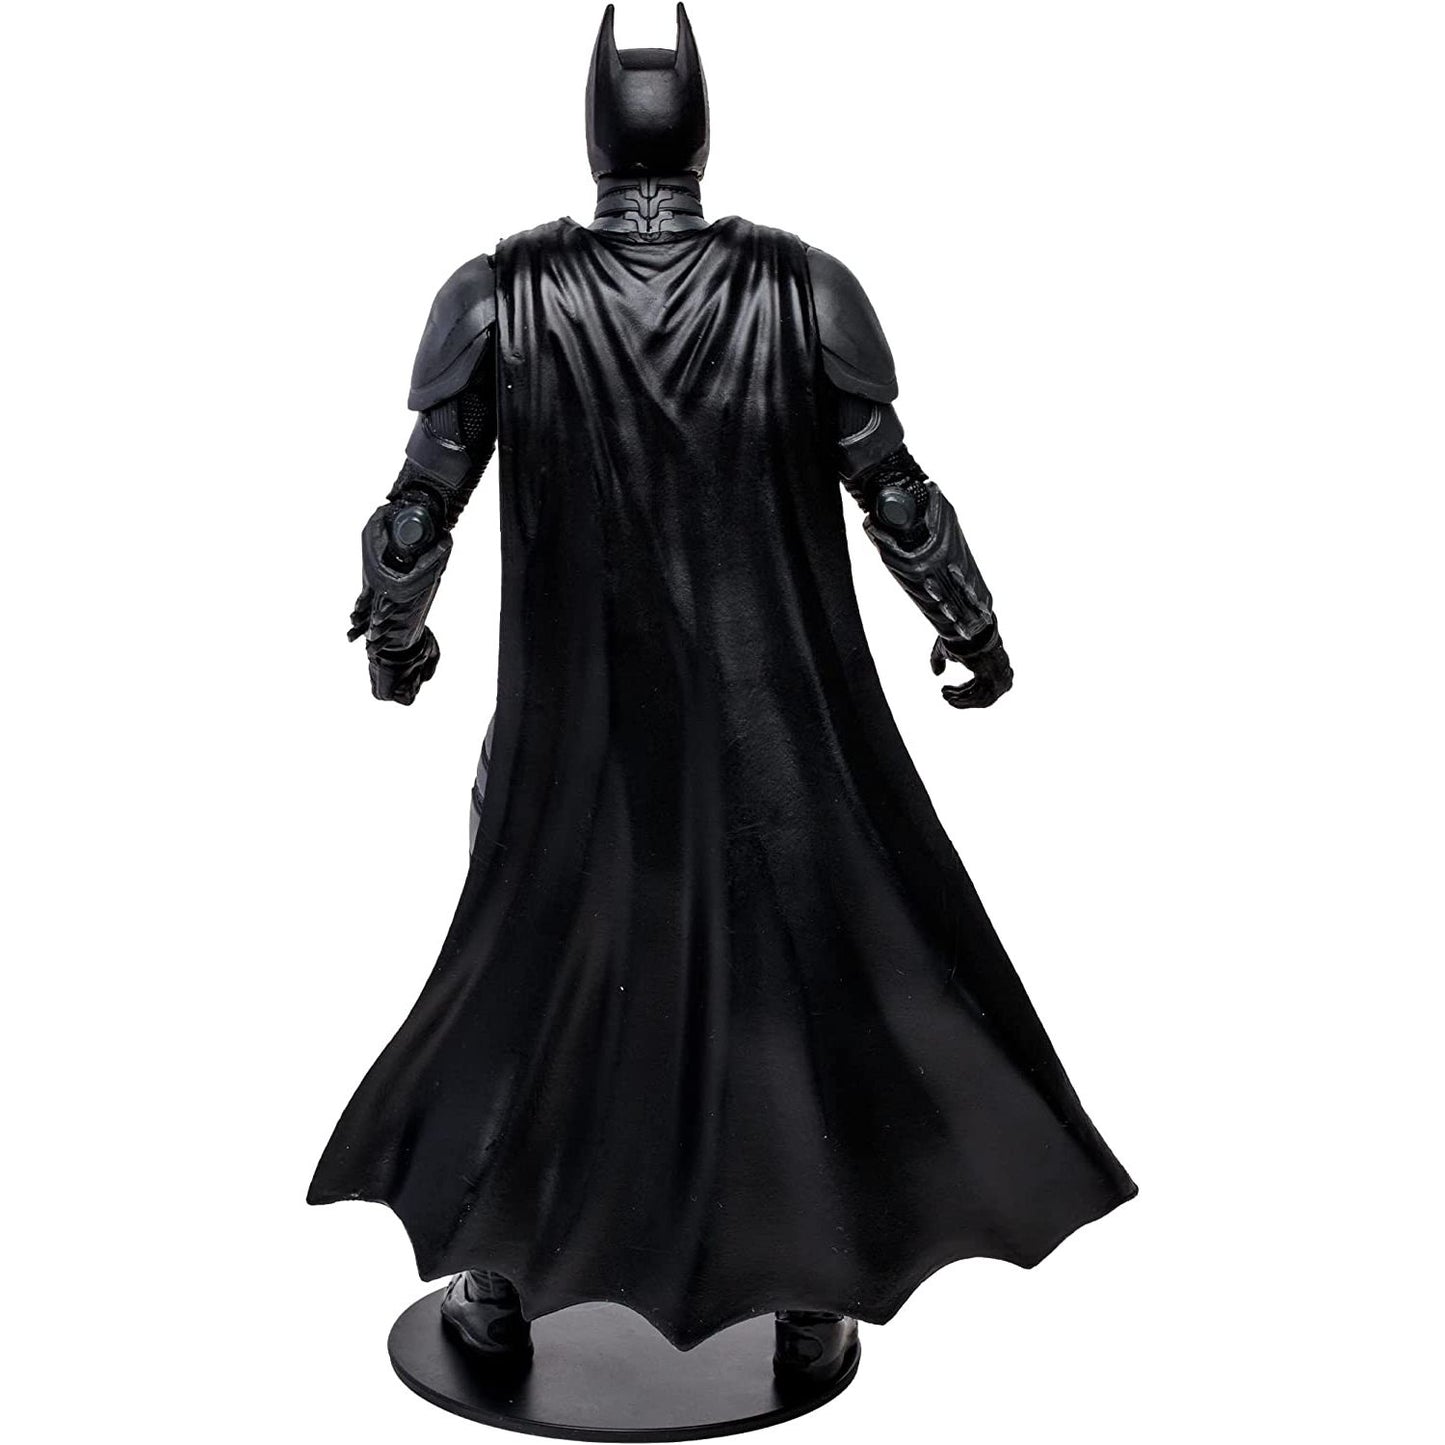 DC Multiverse Batman Action Figure (The Dark Knight Trilogy) 7-Inch Build-A-Figure Toy